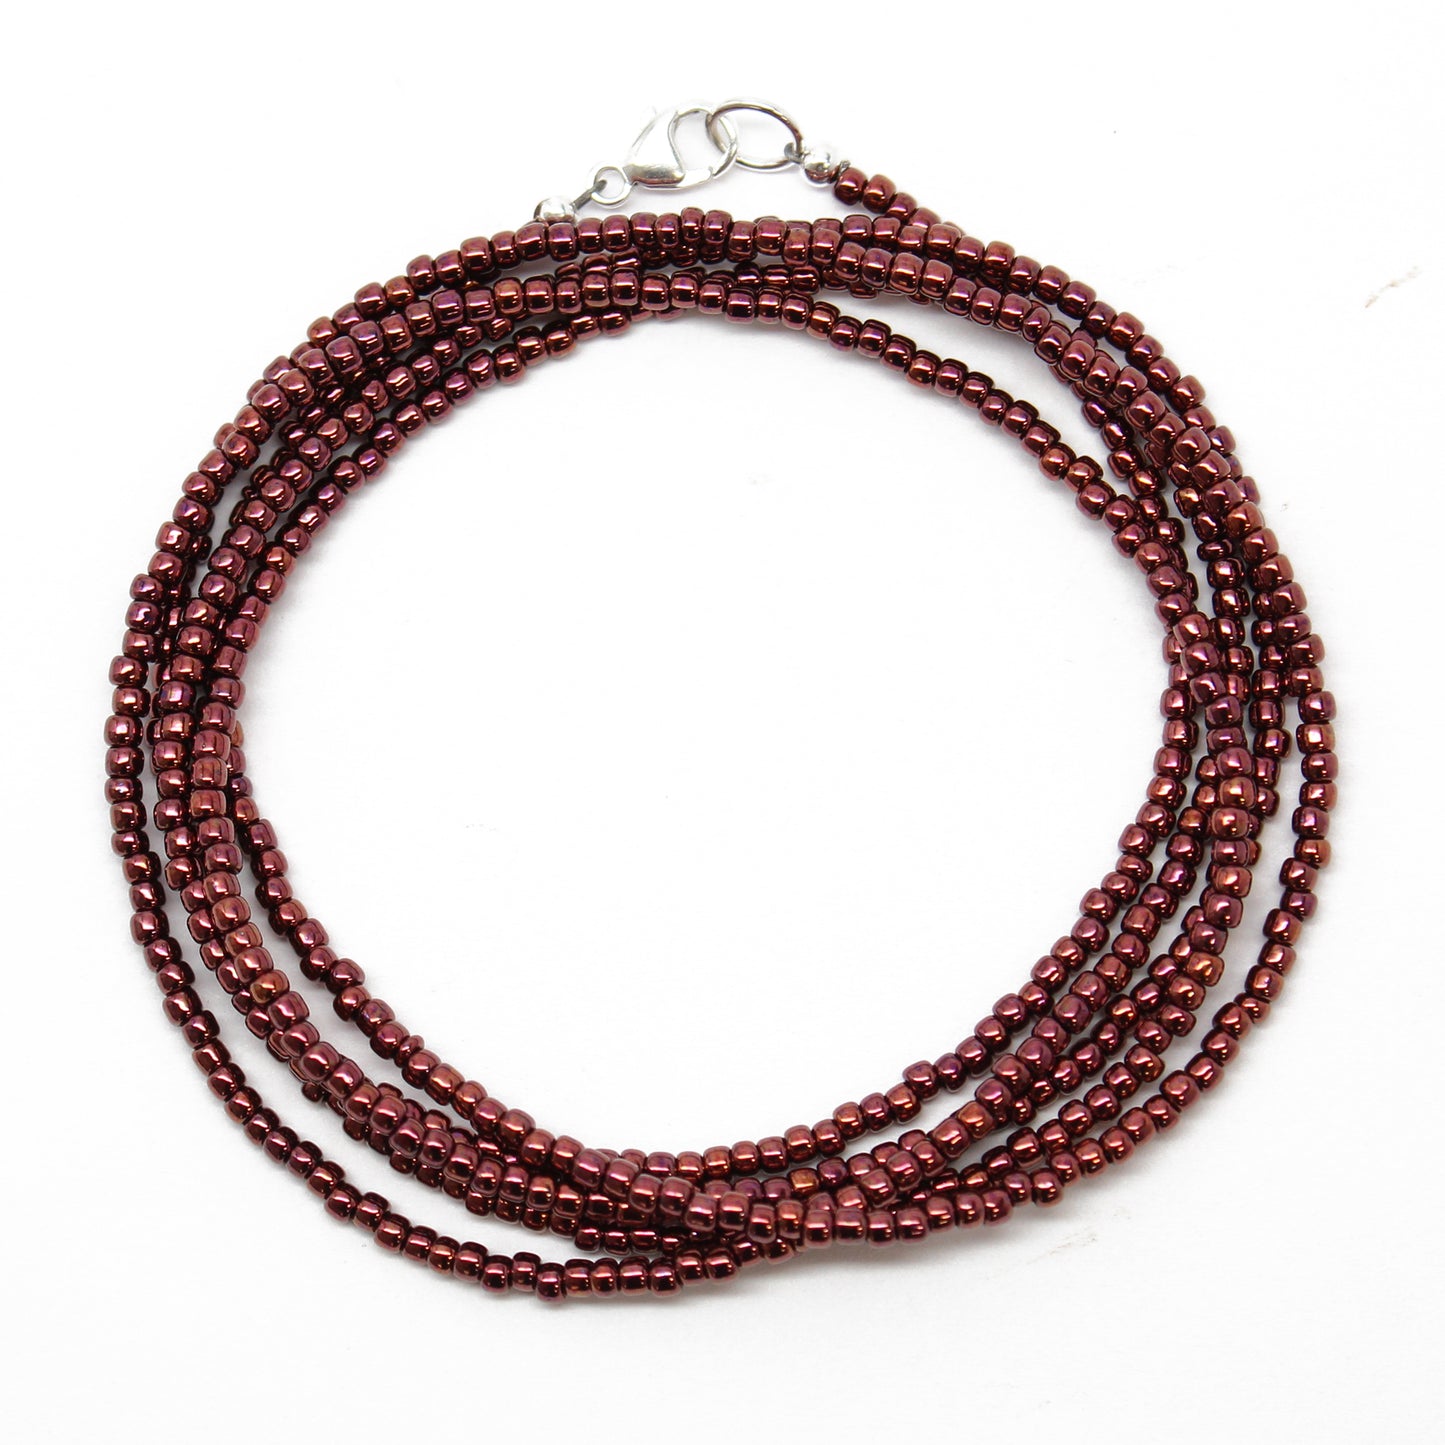 Dark Bronze Seed Bead Necklace-Shiny Metallic Copper Colored -Single Strand